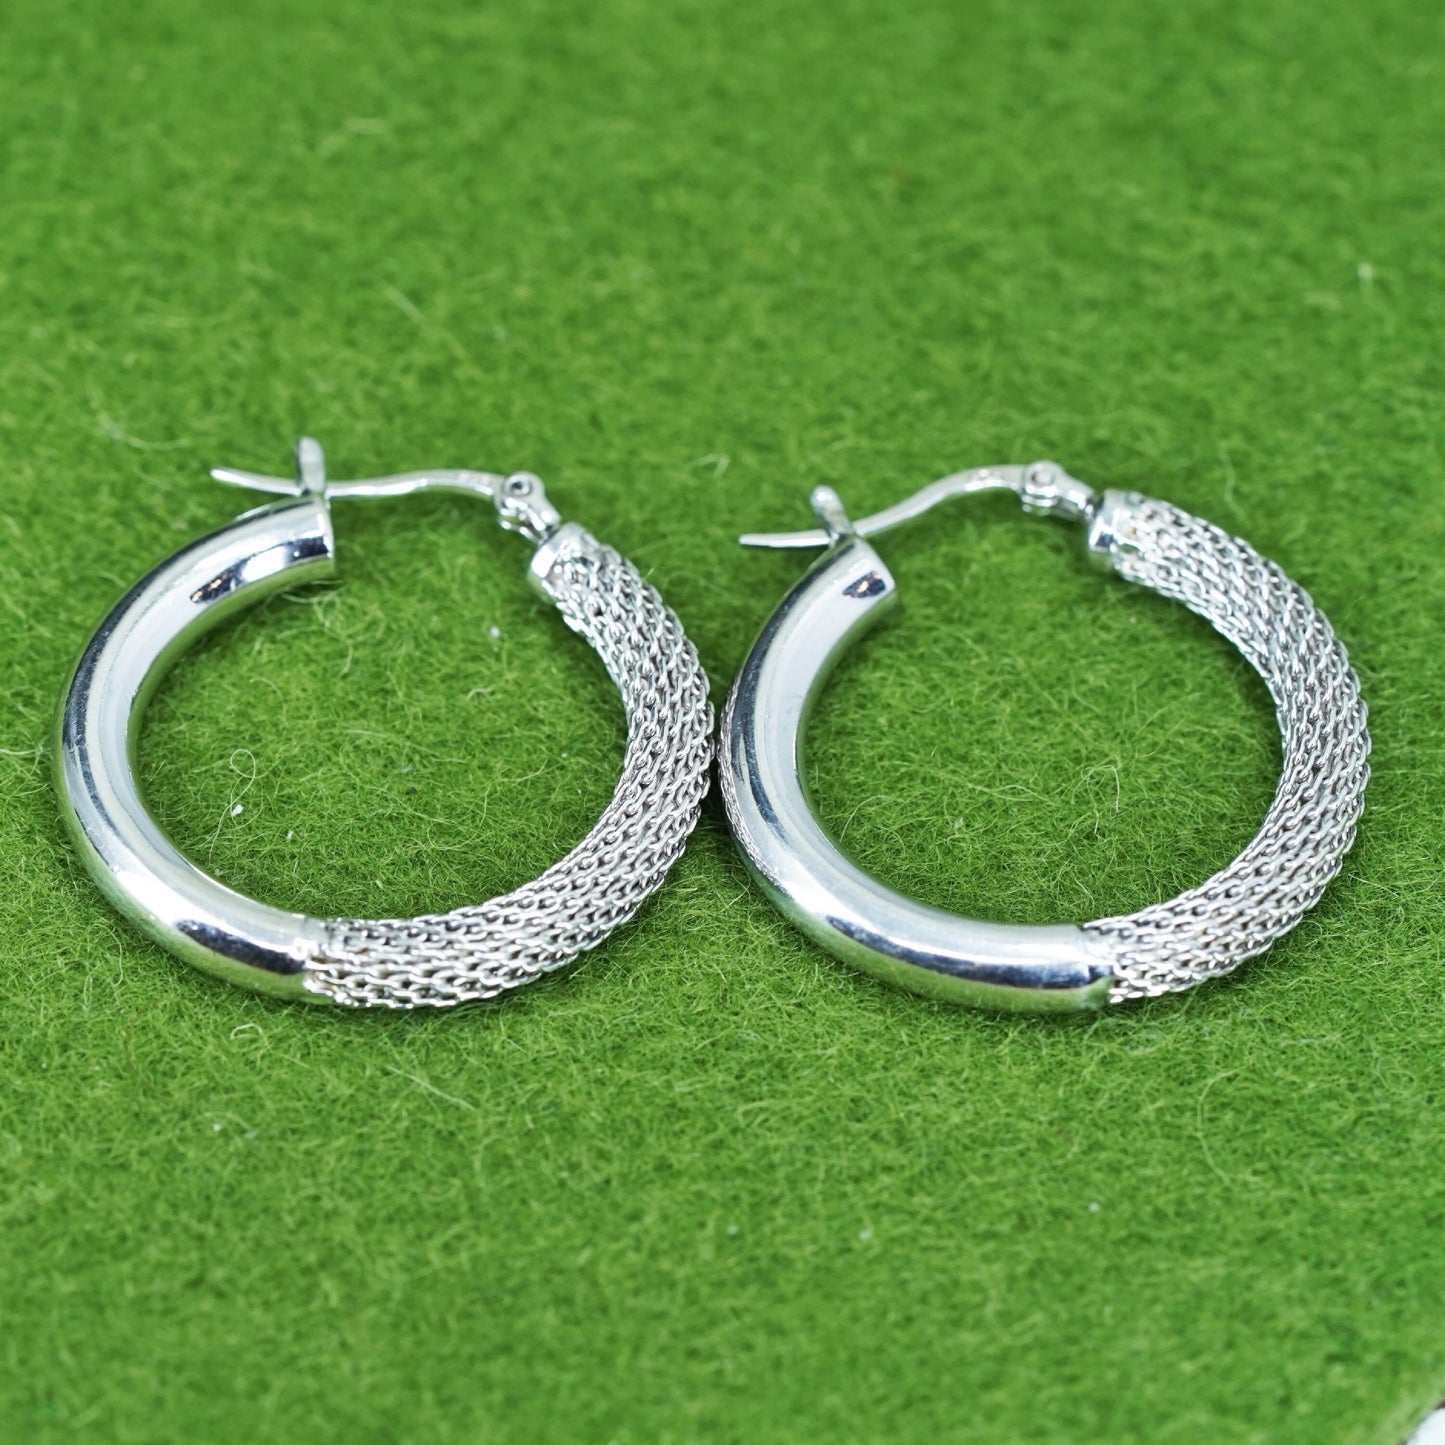 1.25”, VTG sterling silver loop earrings, fashion minimalist primitive hoops